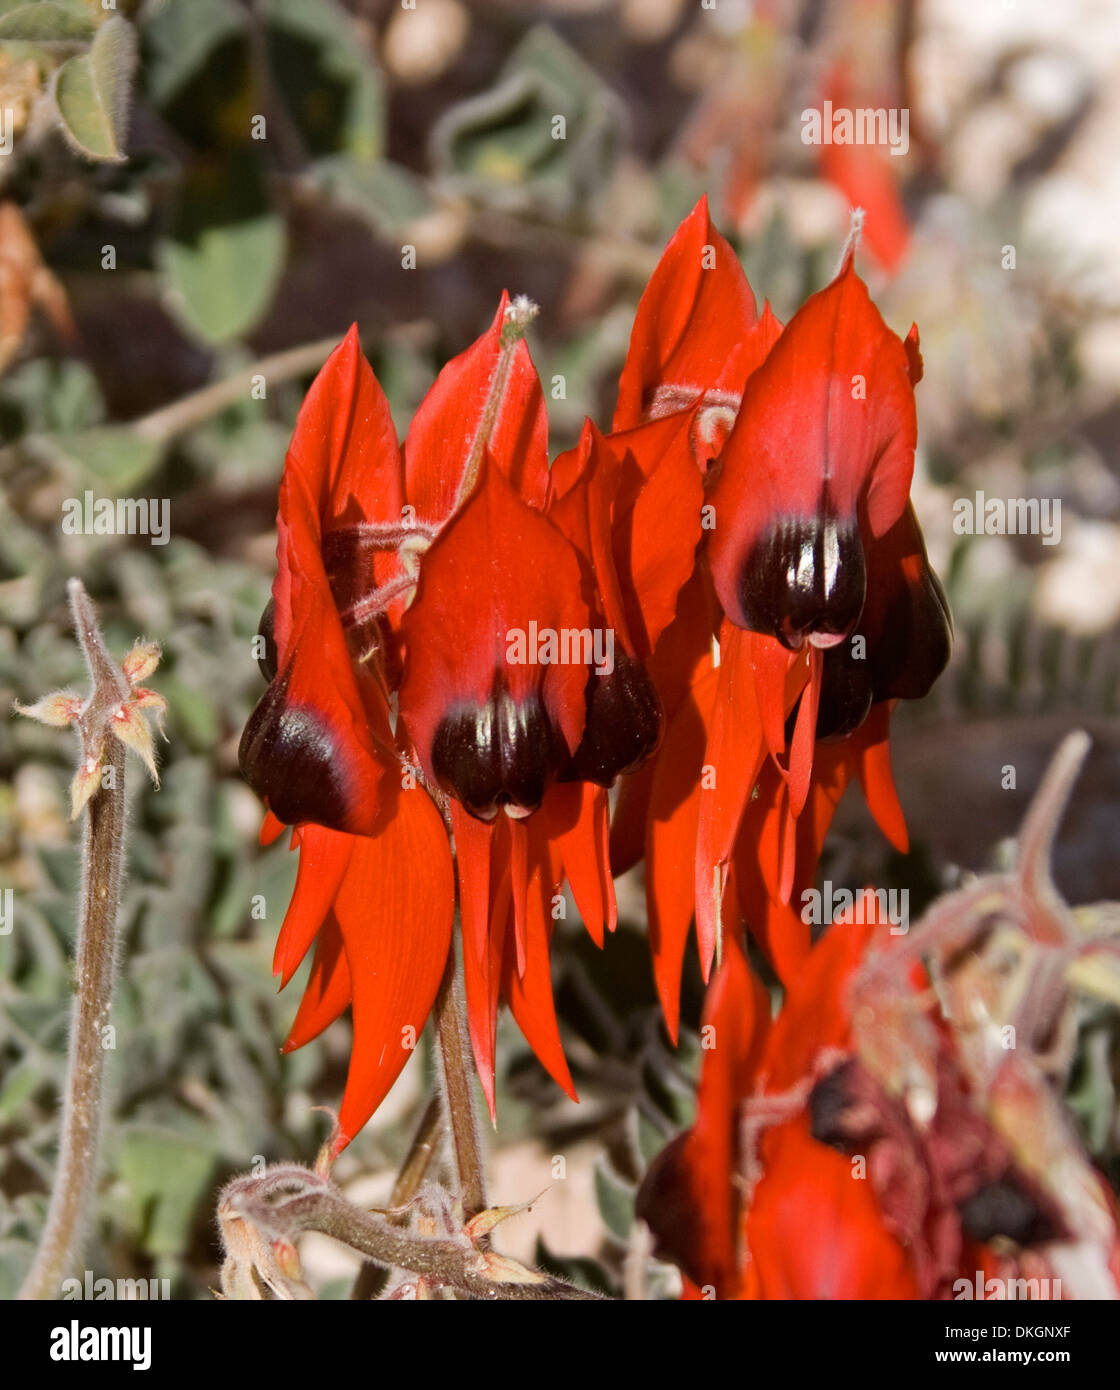 Racimo de flores rojo intenso de Sturt's desert pea, Swainsona formosa, flores silvestres que crecen en el outback Australia Foto de stock